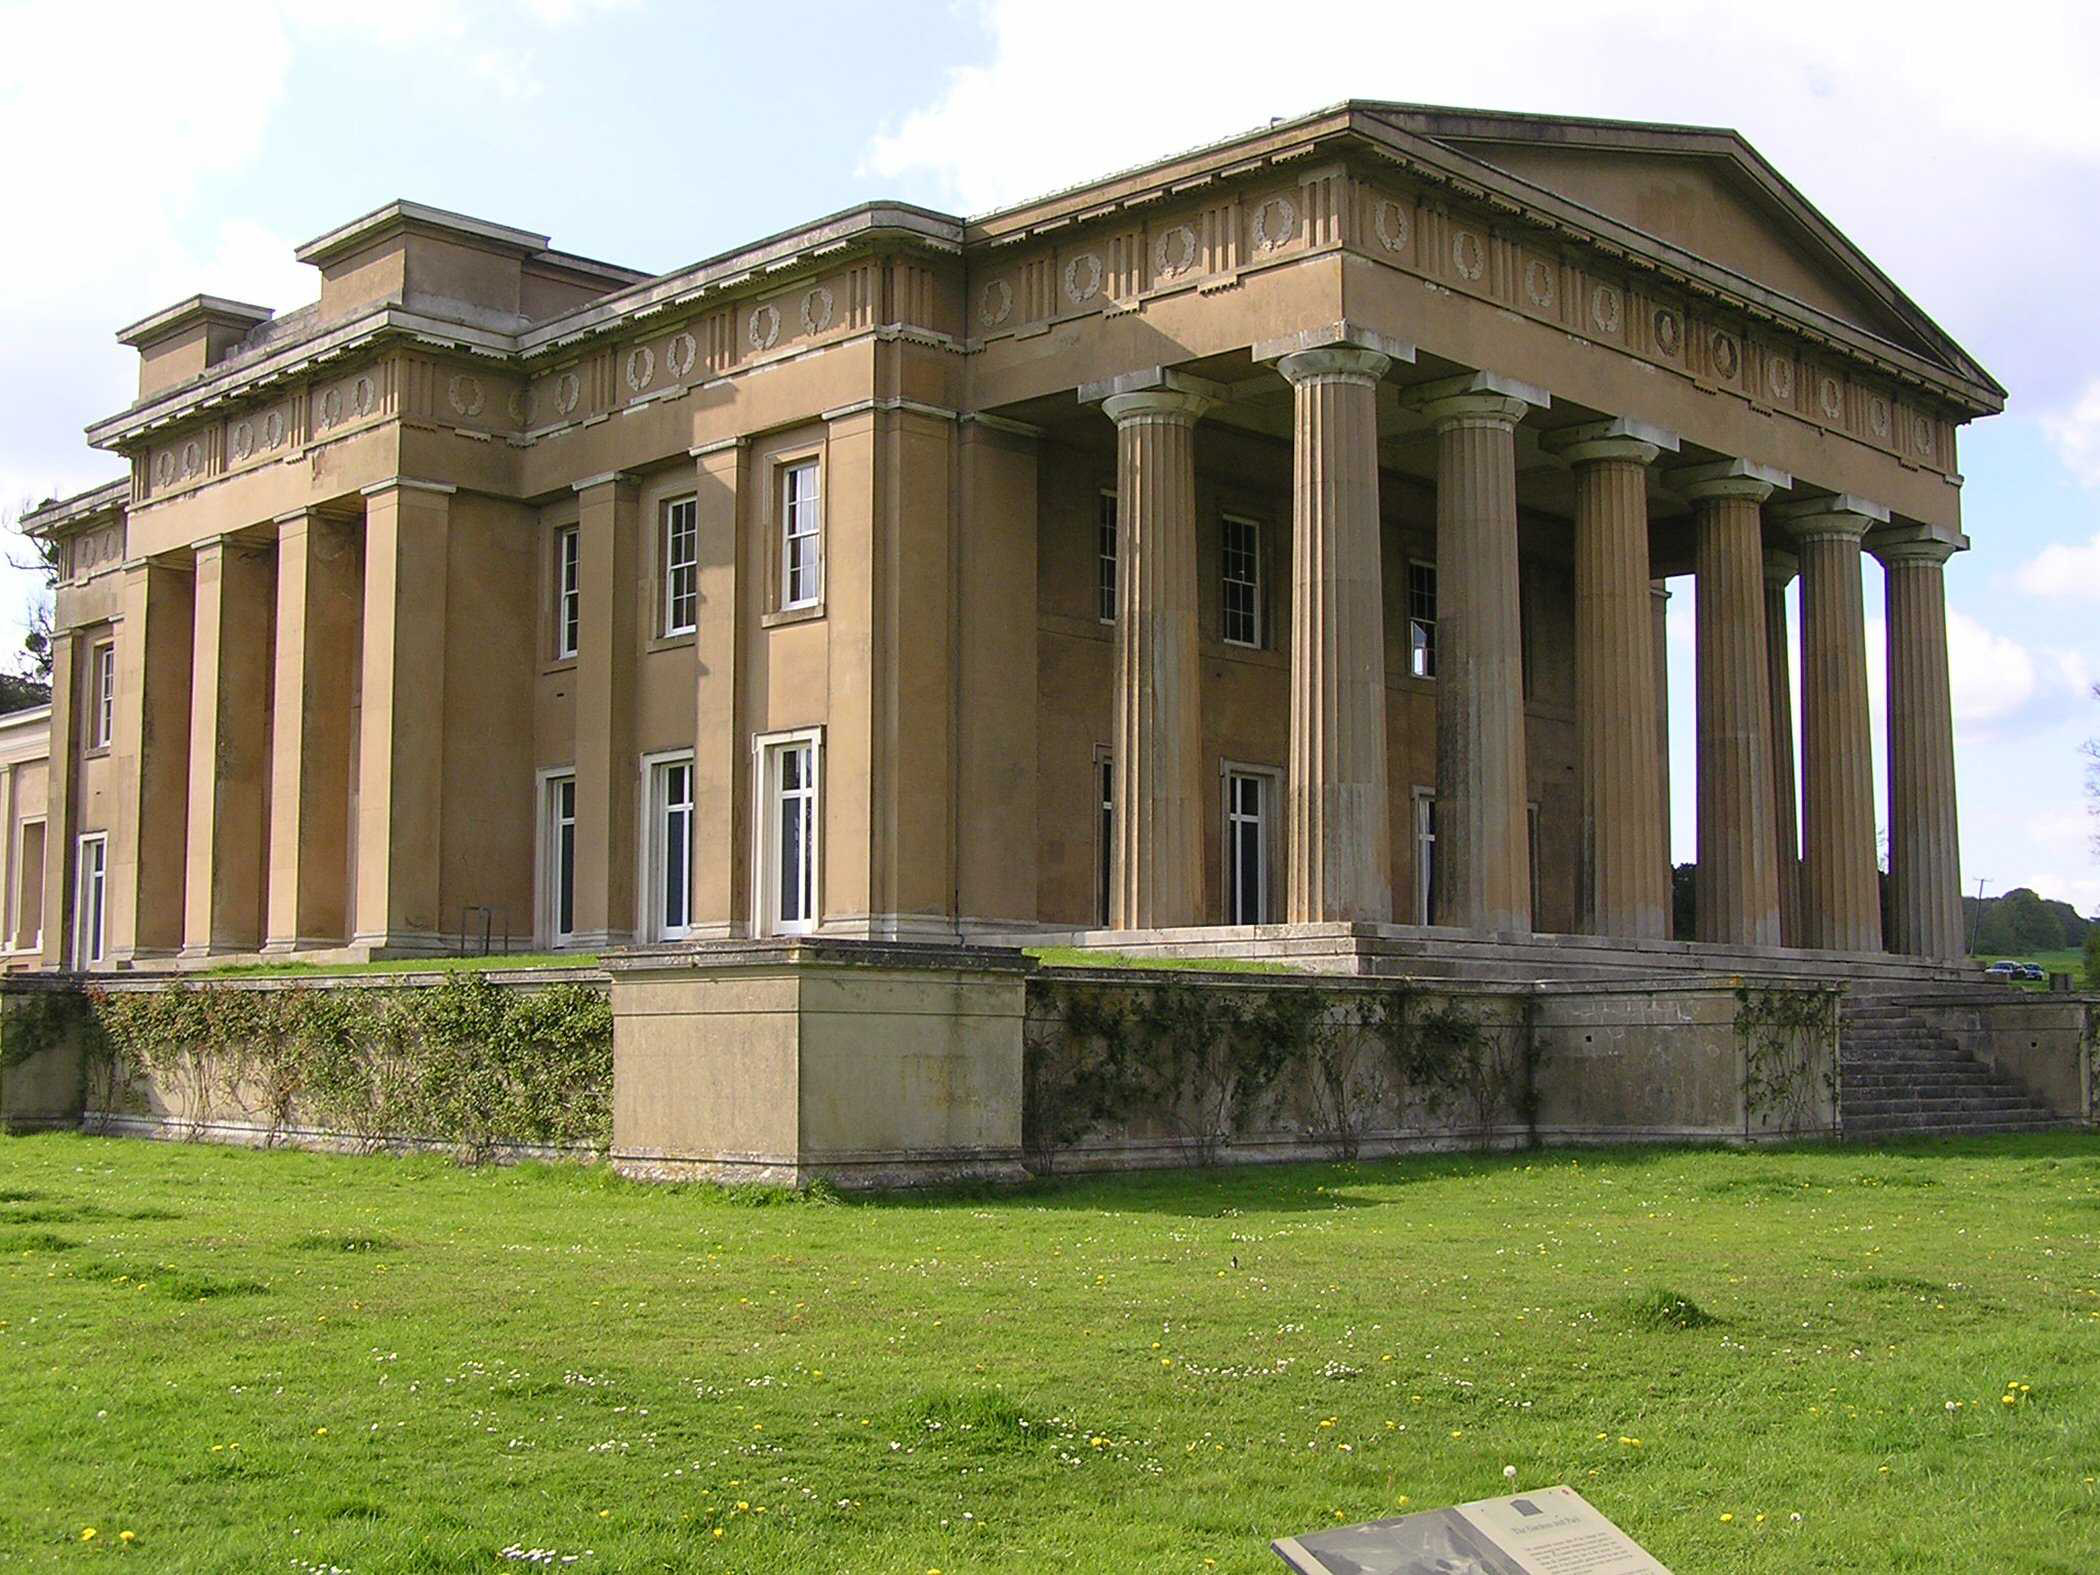 The Grange, transformed in a Greek revival temple in 1804 